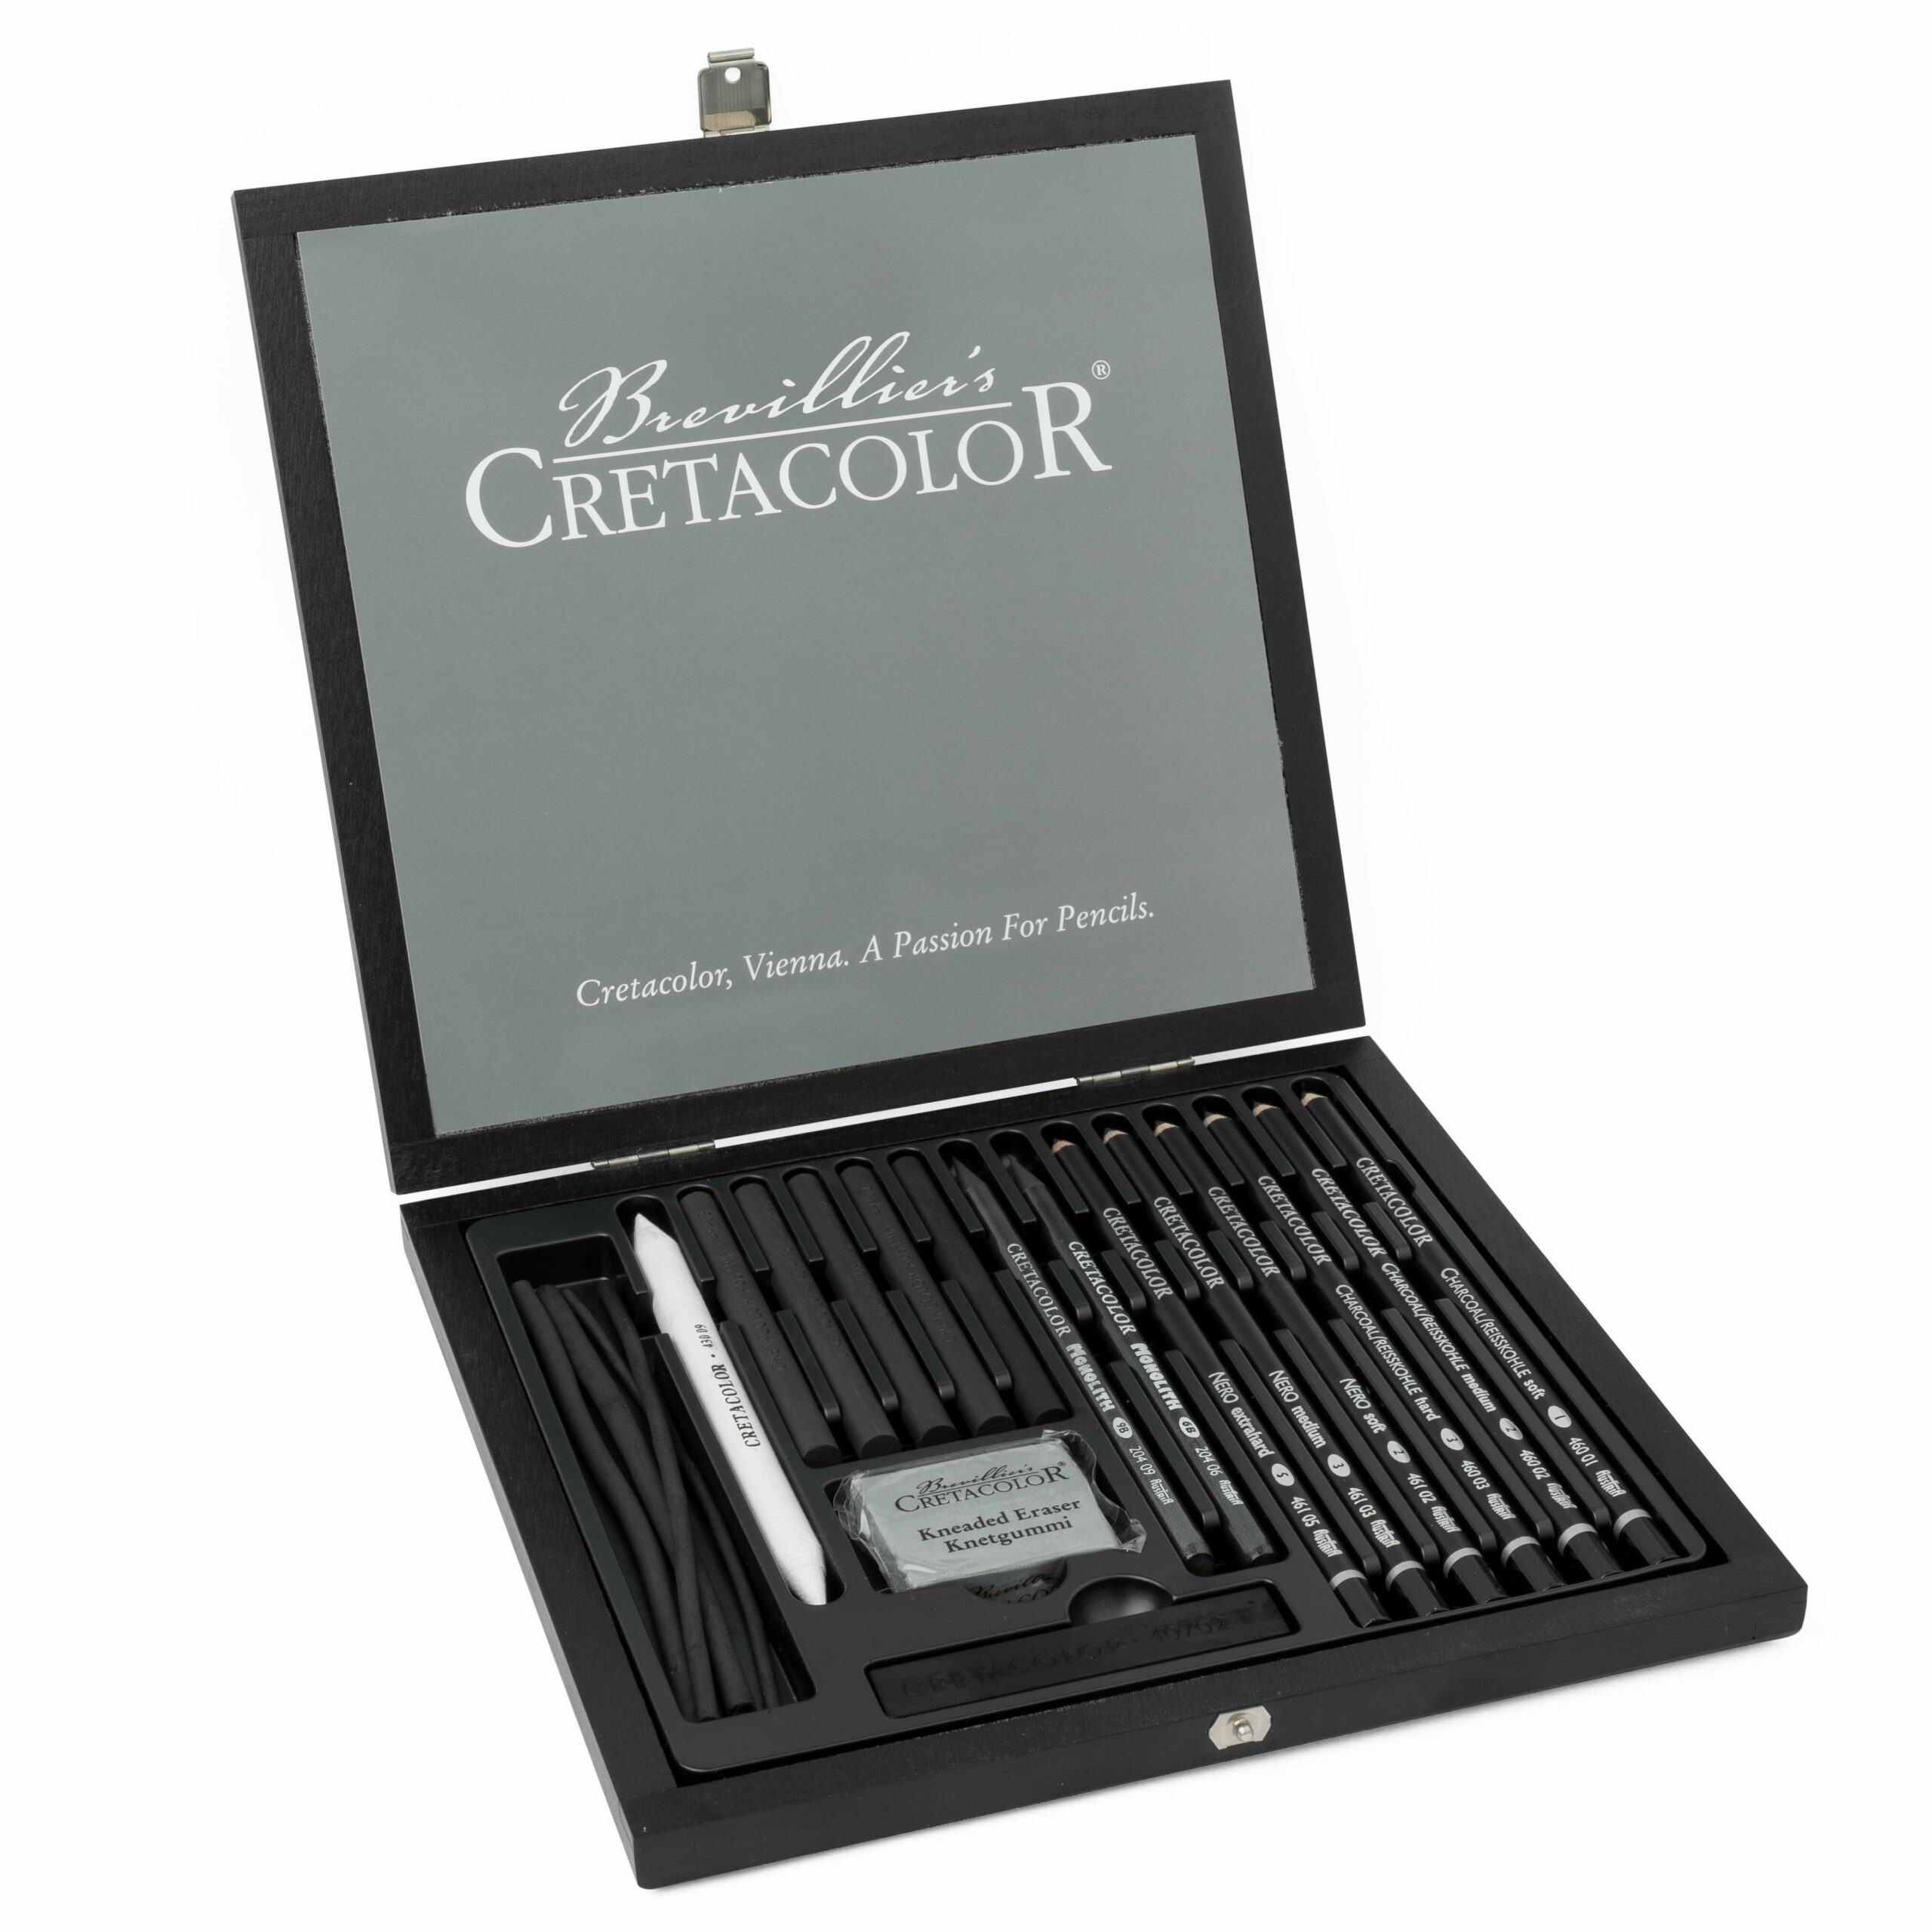 Cretacolor Black Box Drawing Set - Artist & Craftsman Supply